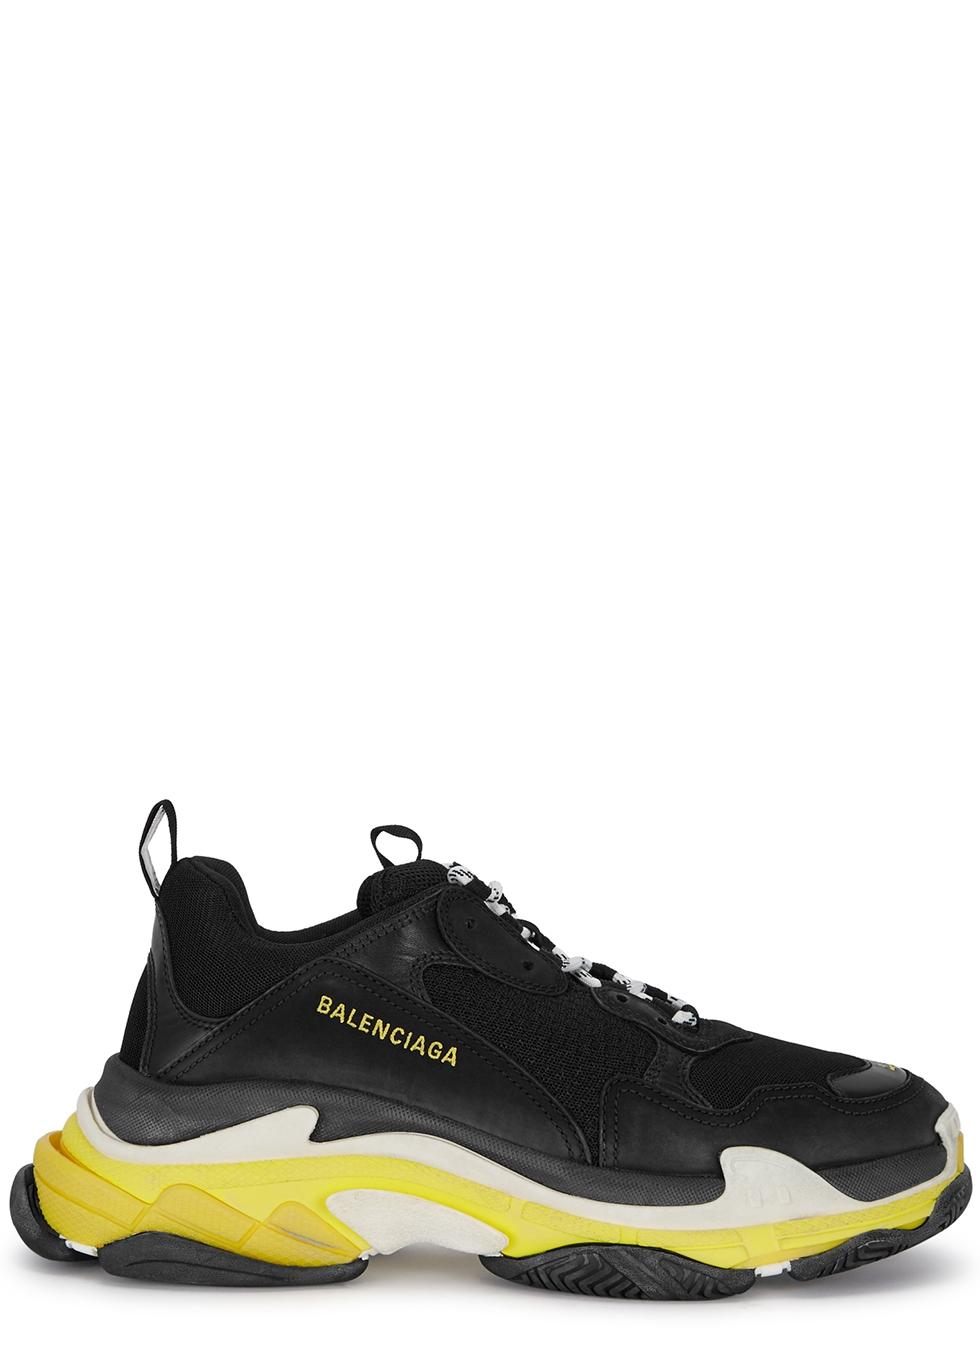 Balenciaga Triple S Black And Yellow Mesh Sneakers for Men | Lyst UK